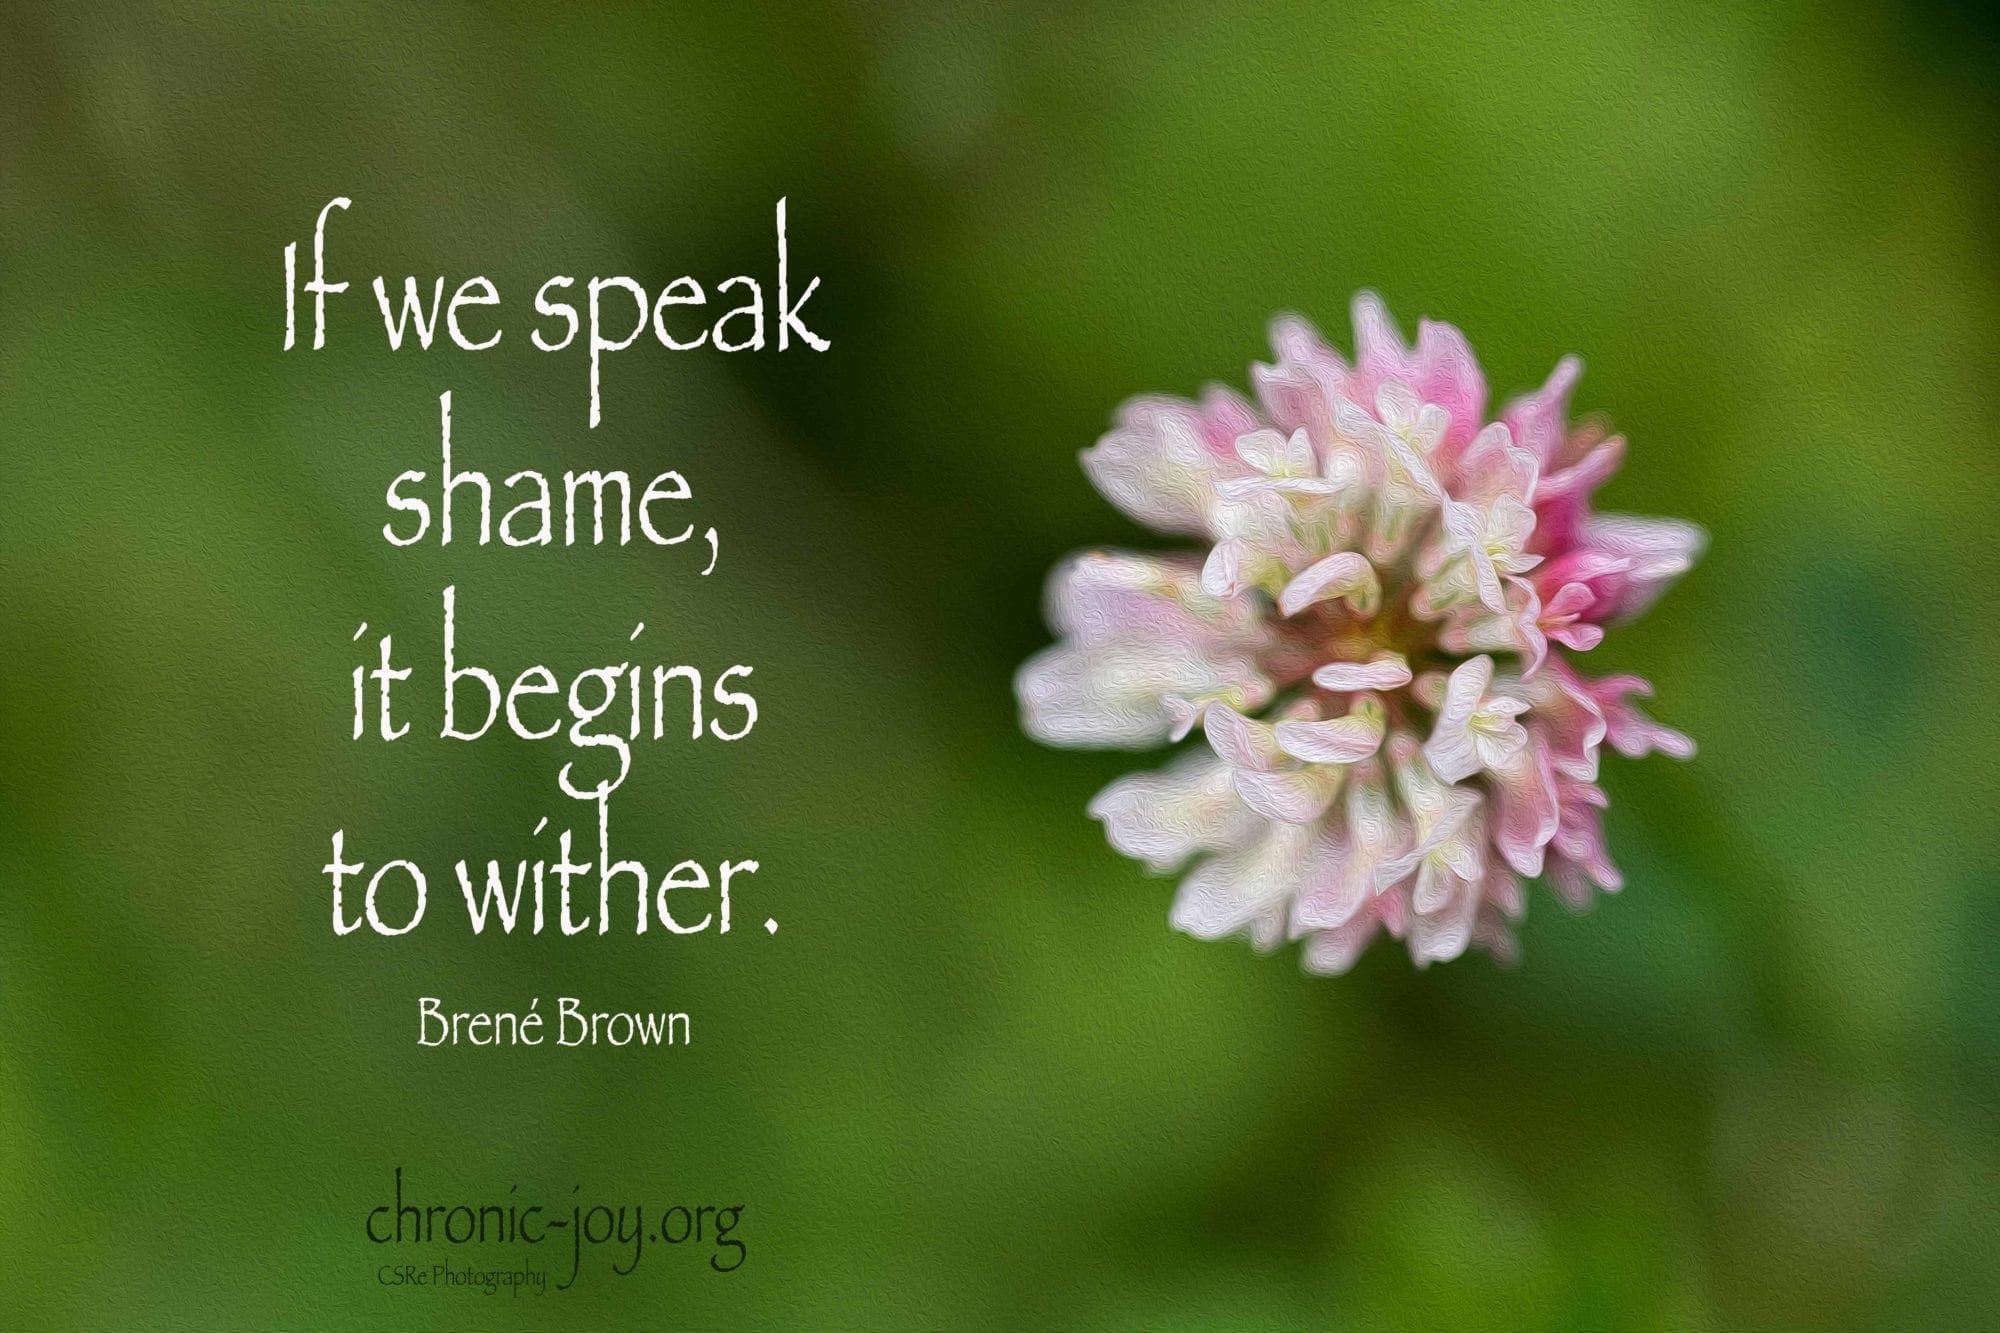 If we speak shame, it begins to wither. ~ Brené Brown